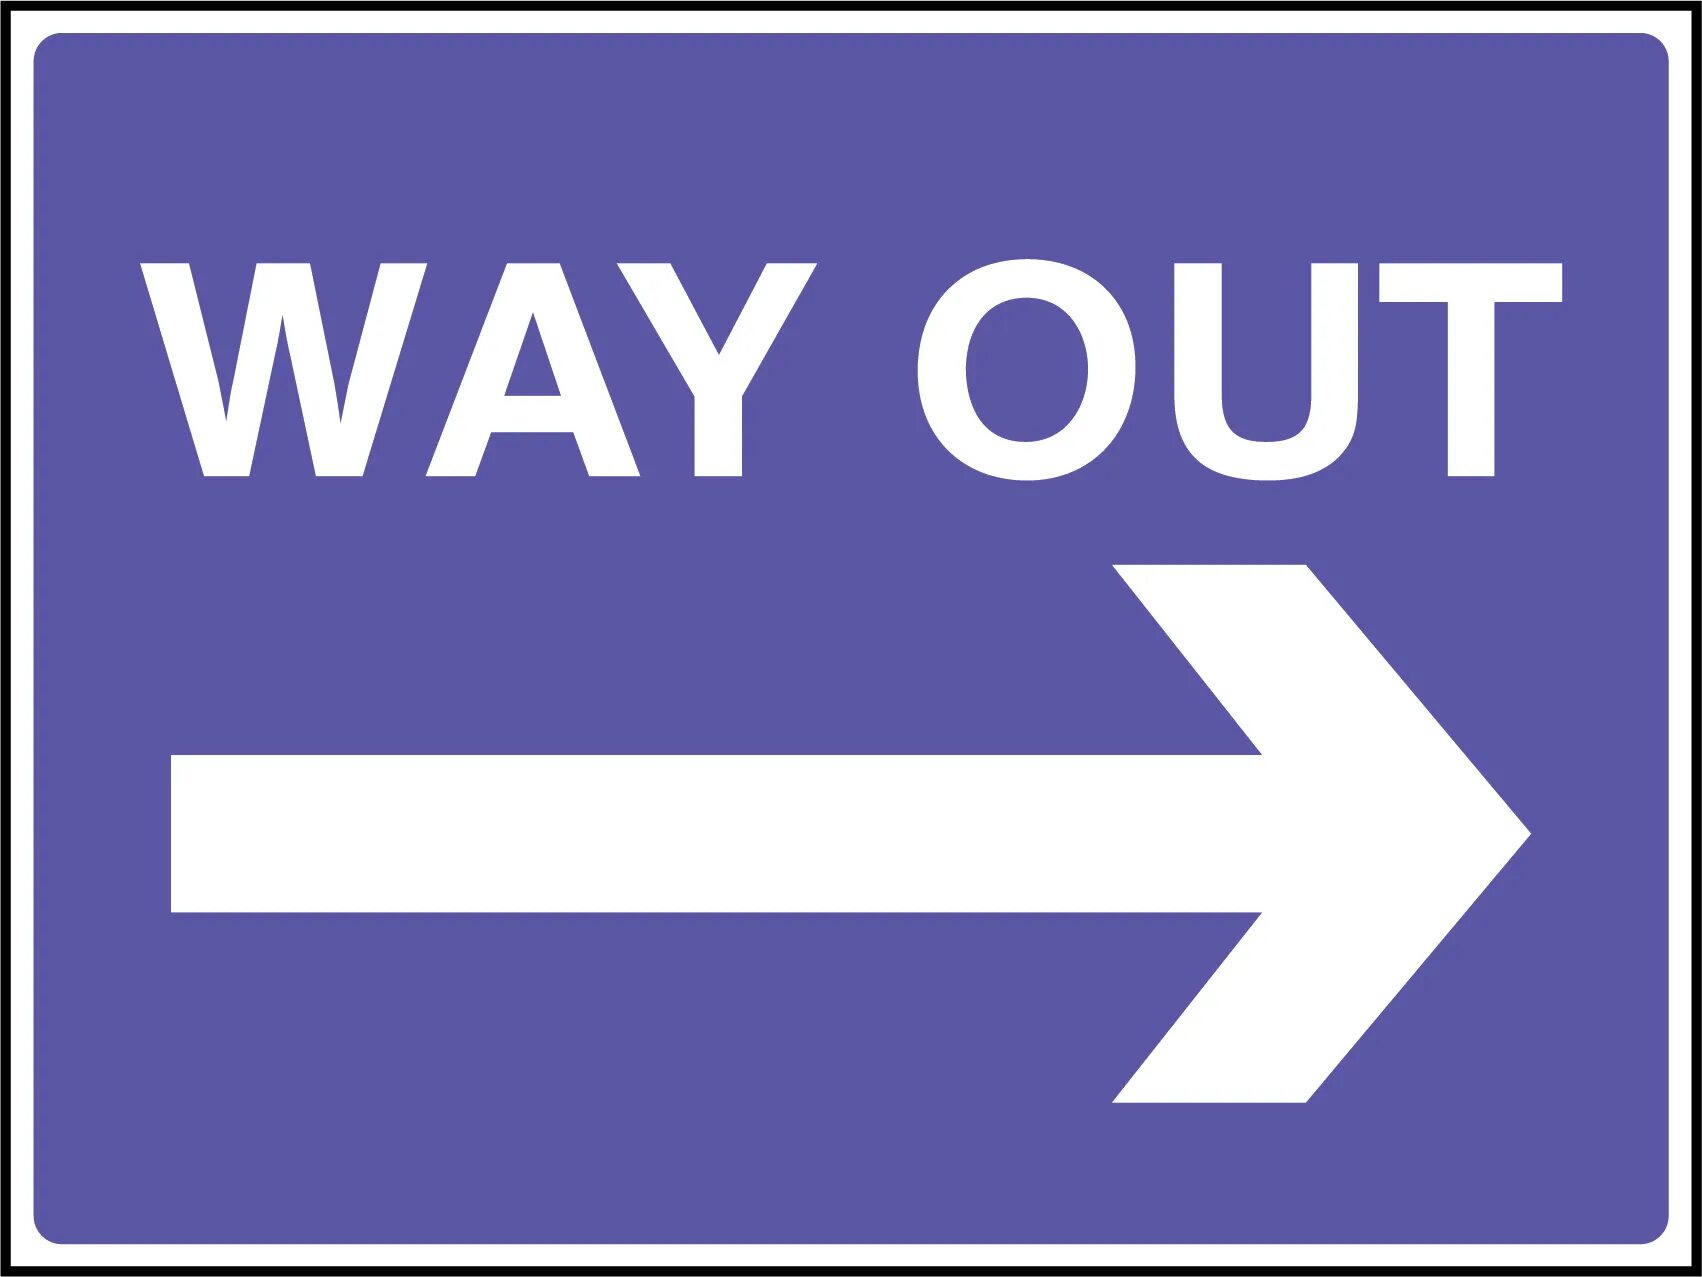 Way sign. Out out. Way out табличка. Sign out. Дорожный знак населенный пункт на синем фоне.